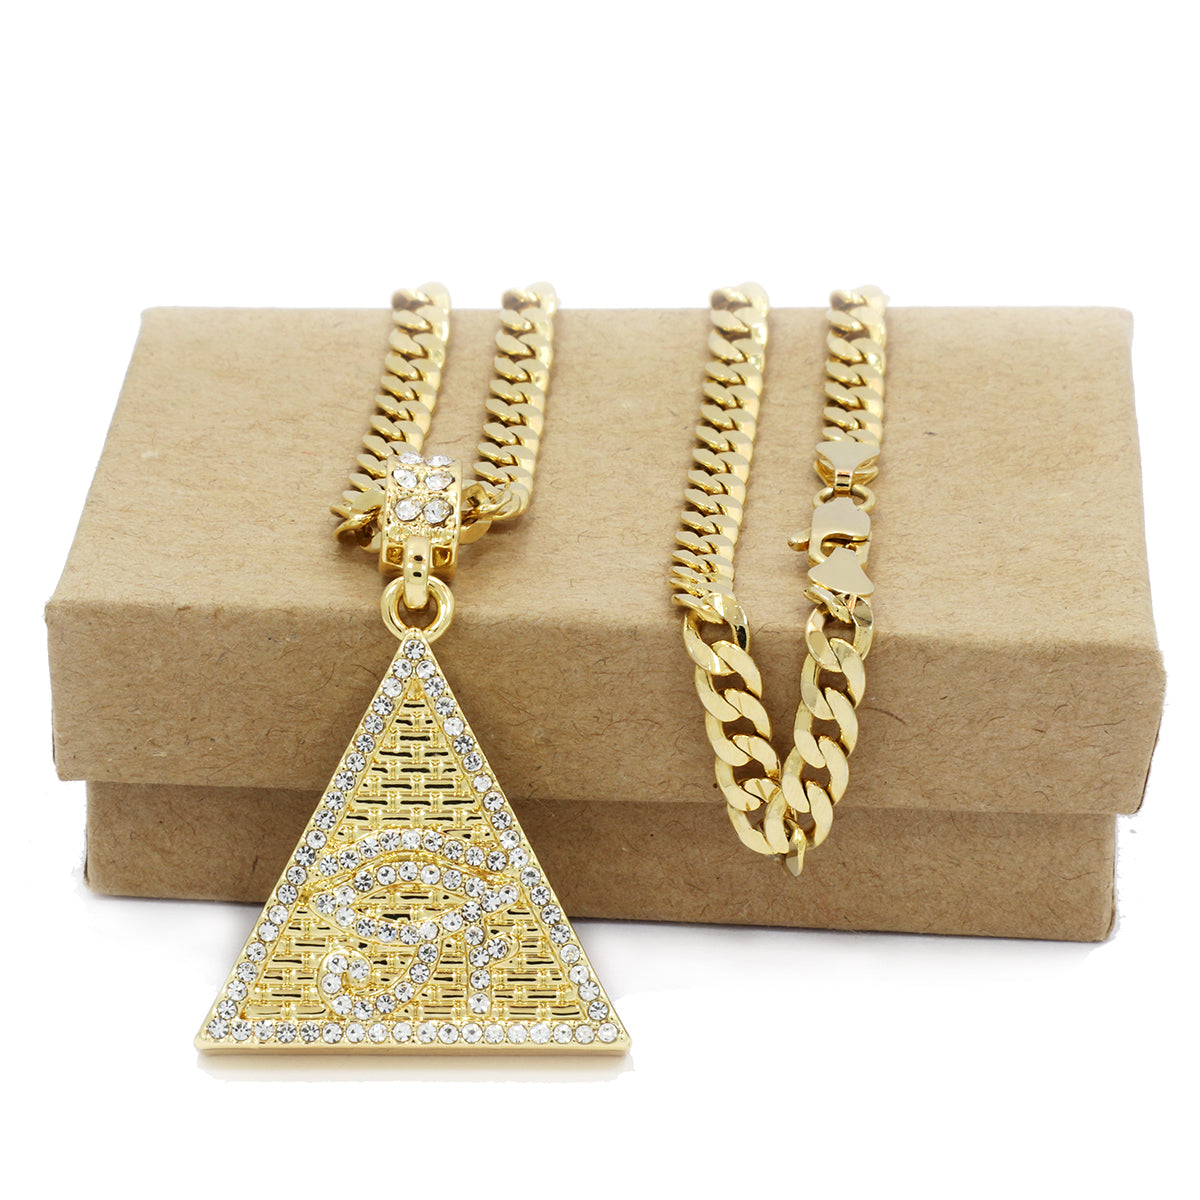 The Eye Horus Pyramid Necklace